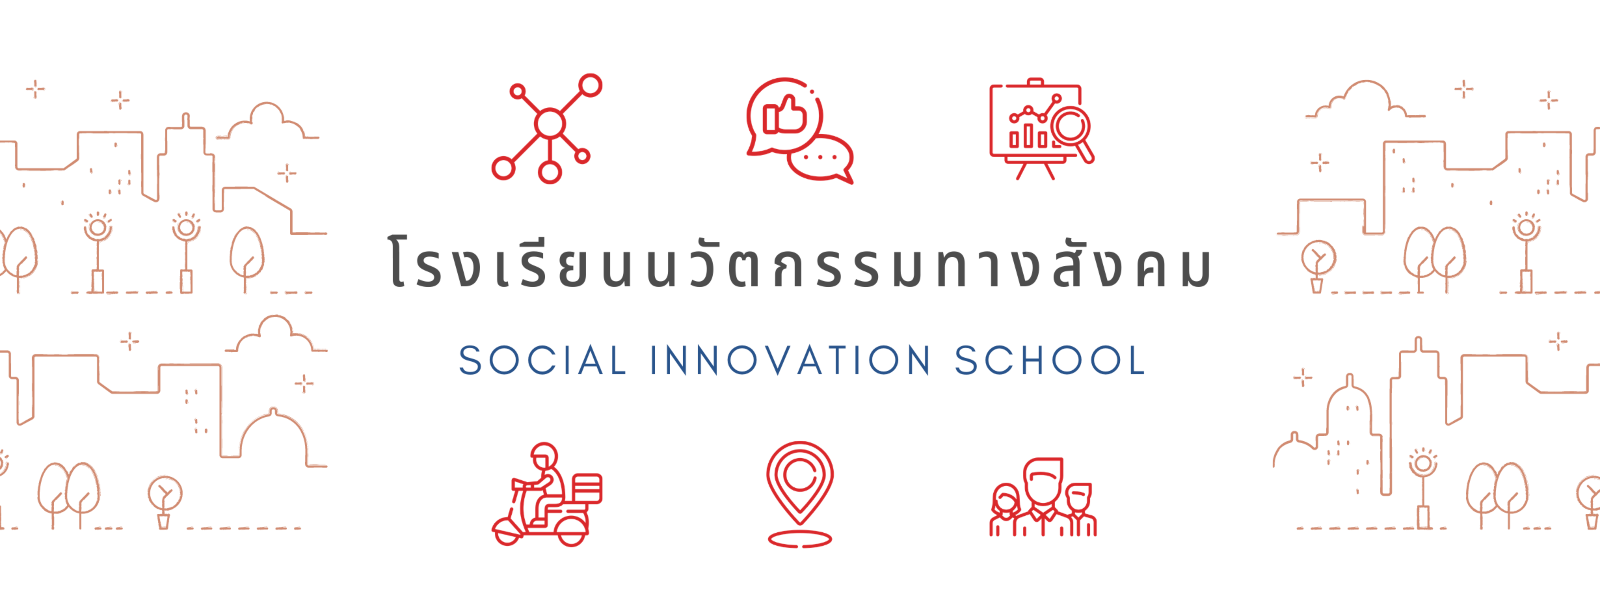 Social innovation school cover image